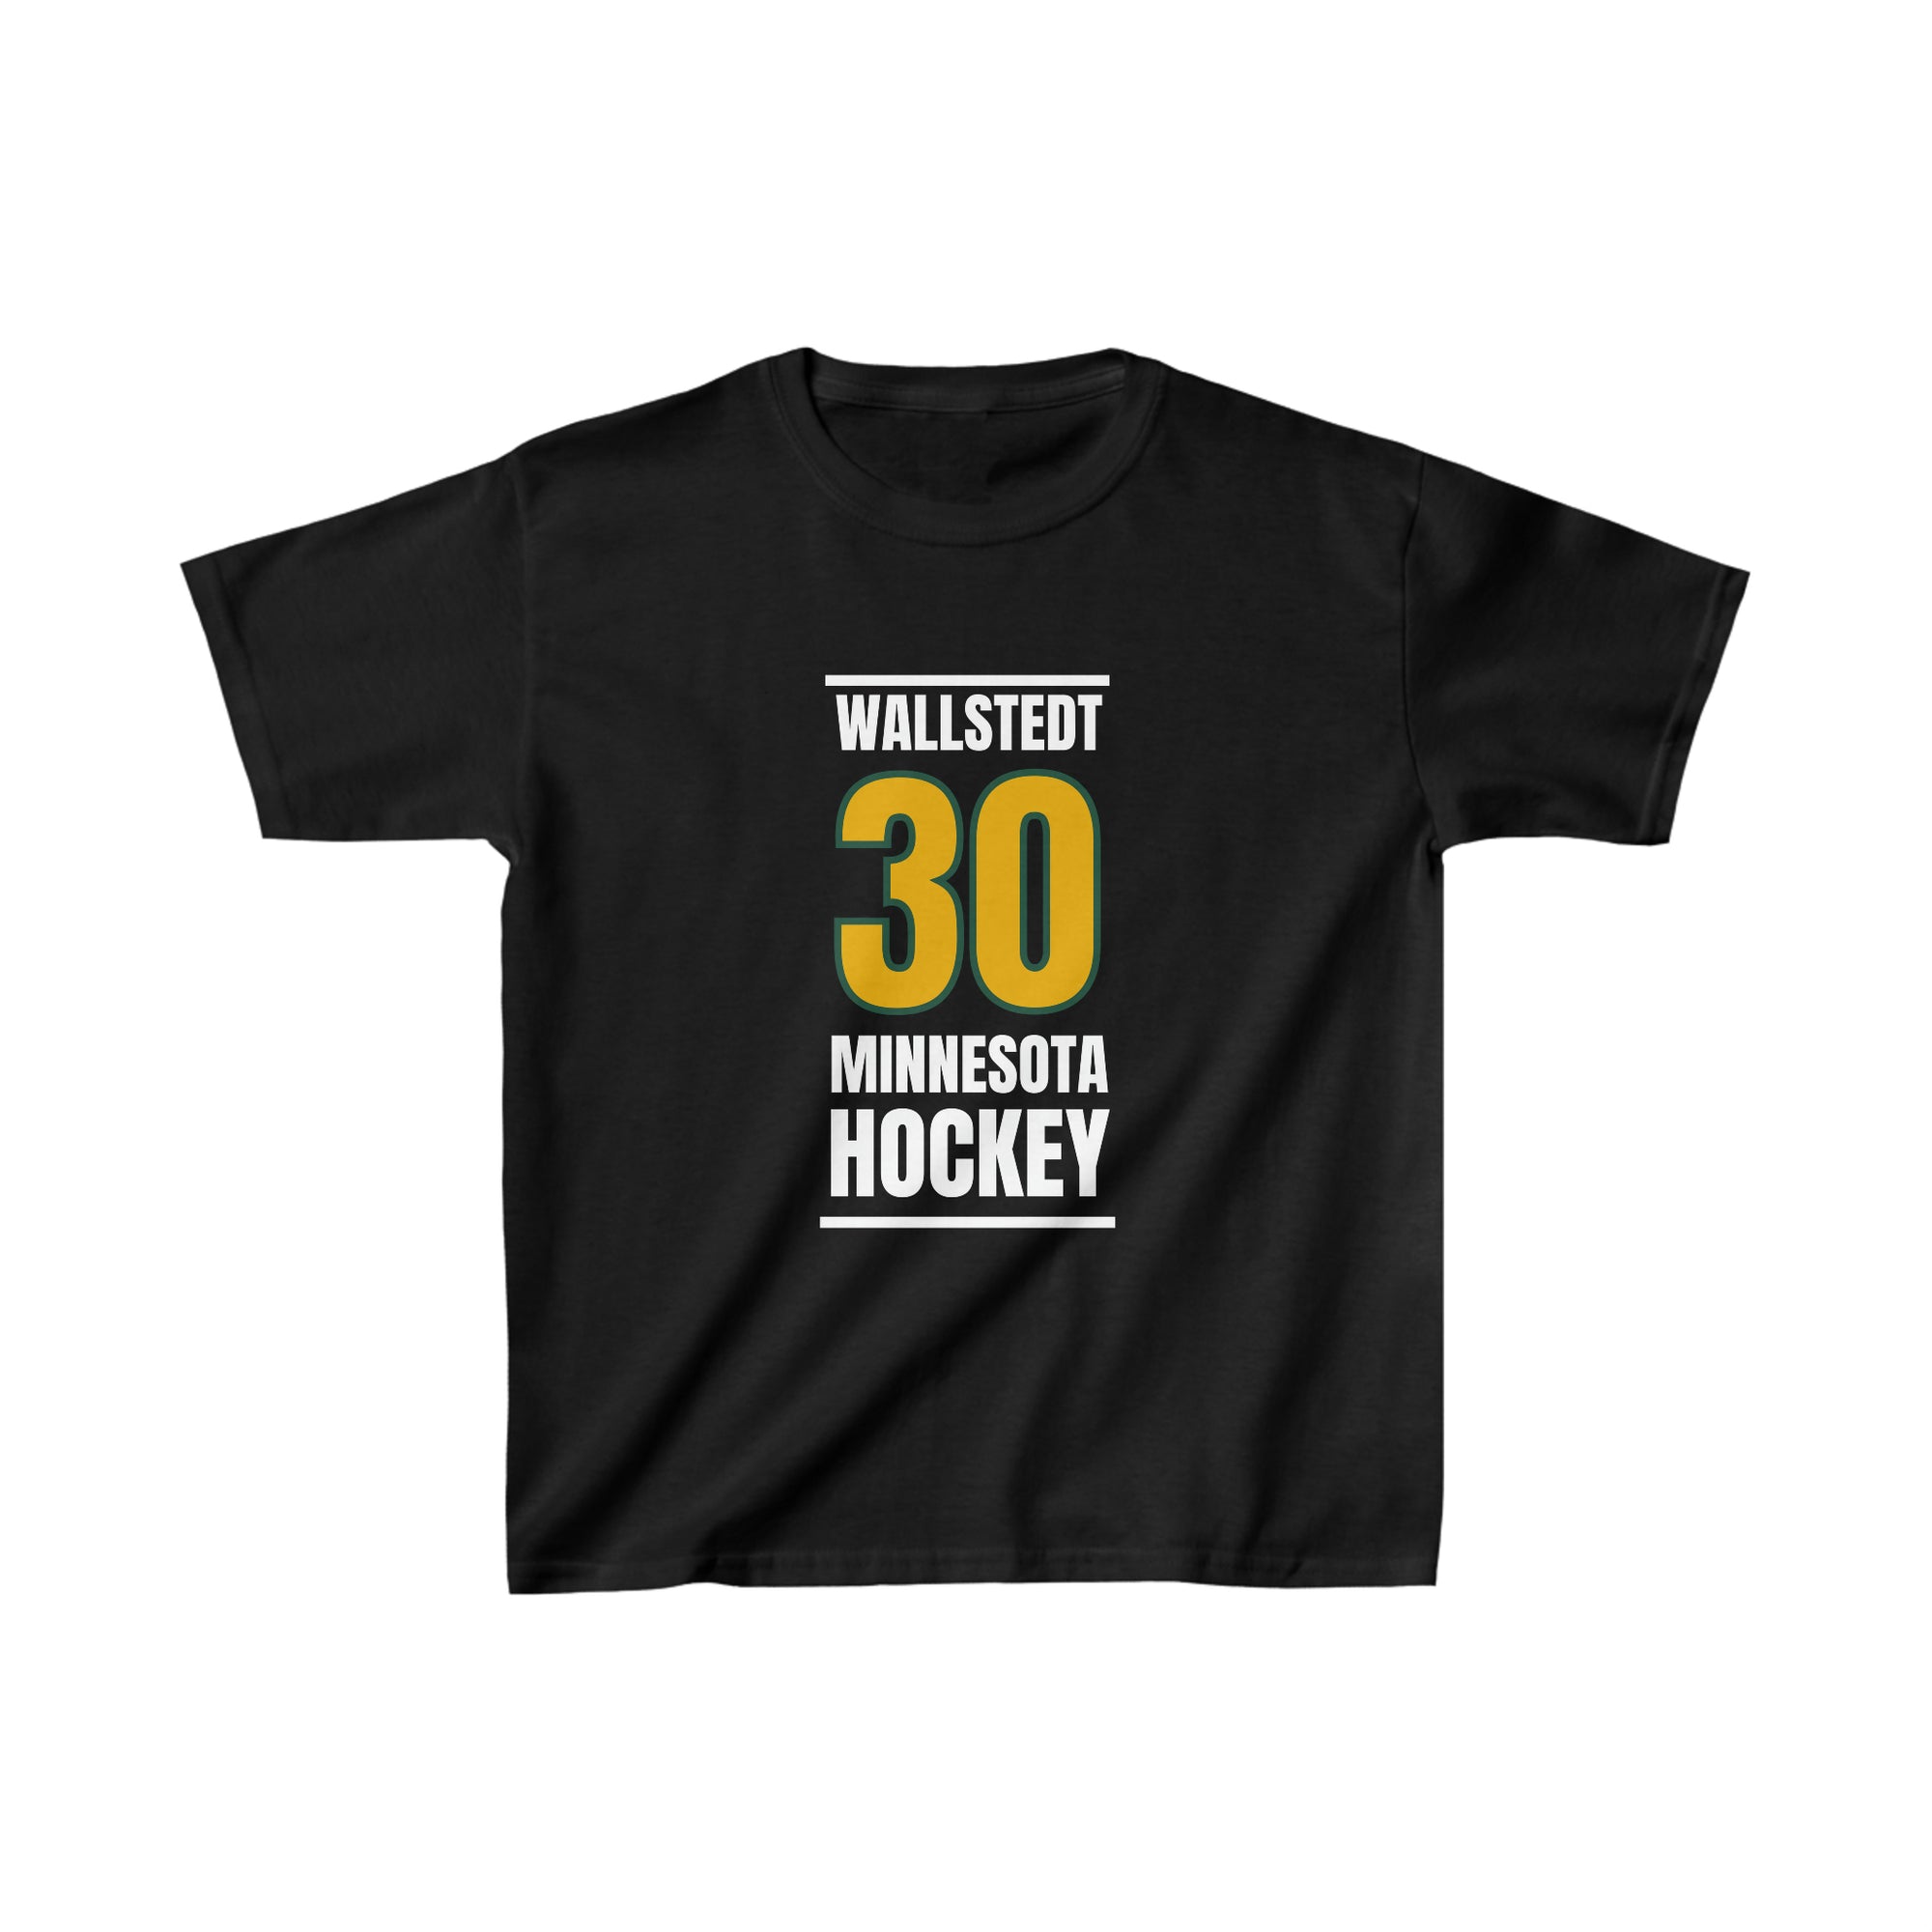 Wallstedt 30 Minnesota Hockey Gold Vertical Design Kids Tee